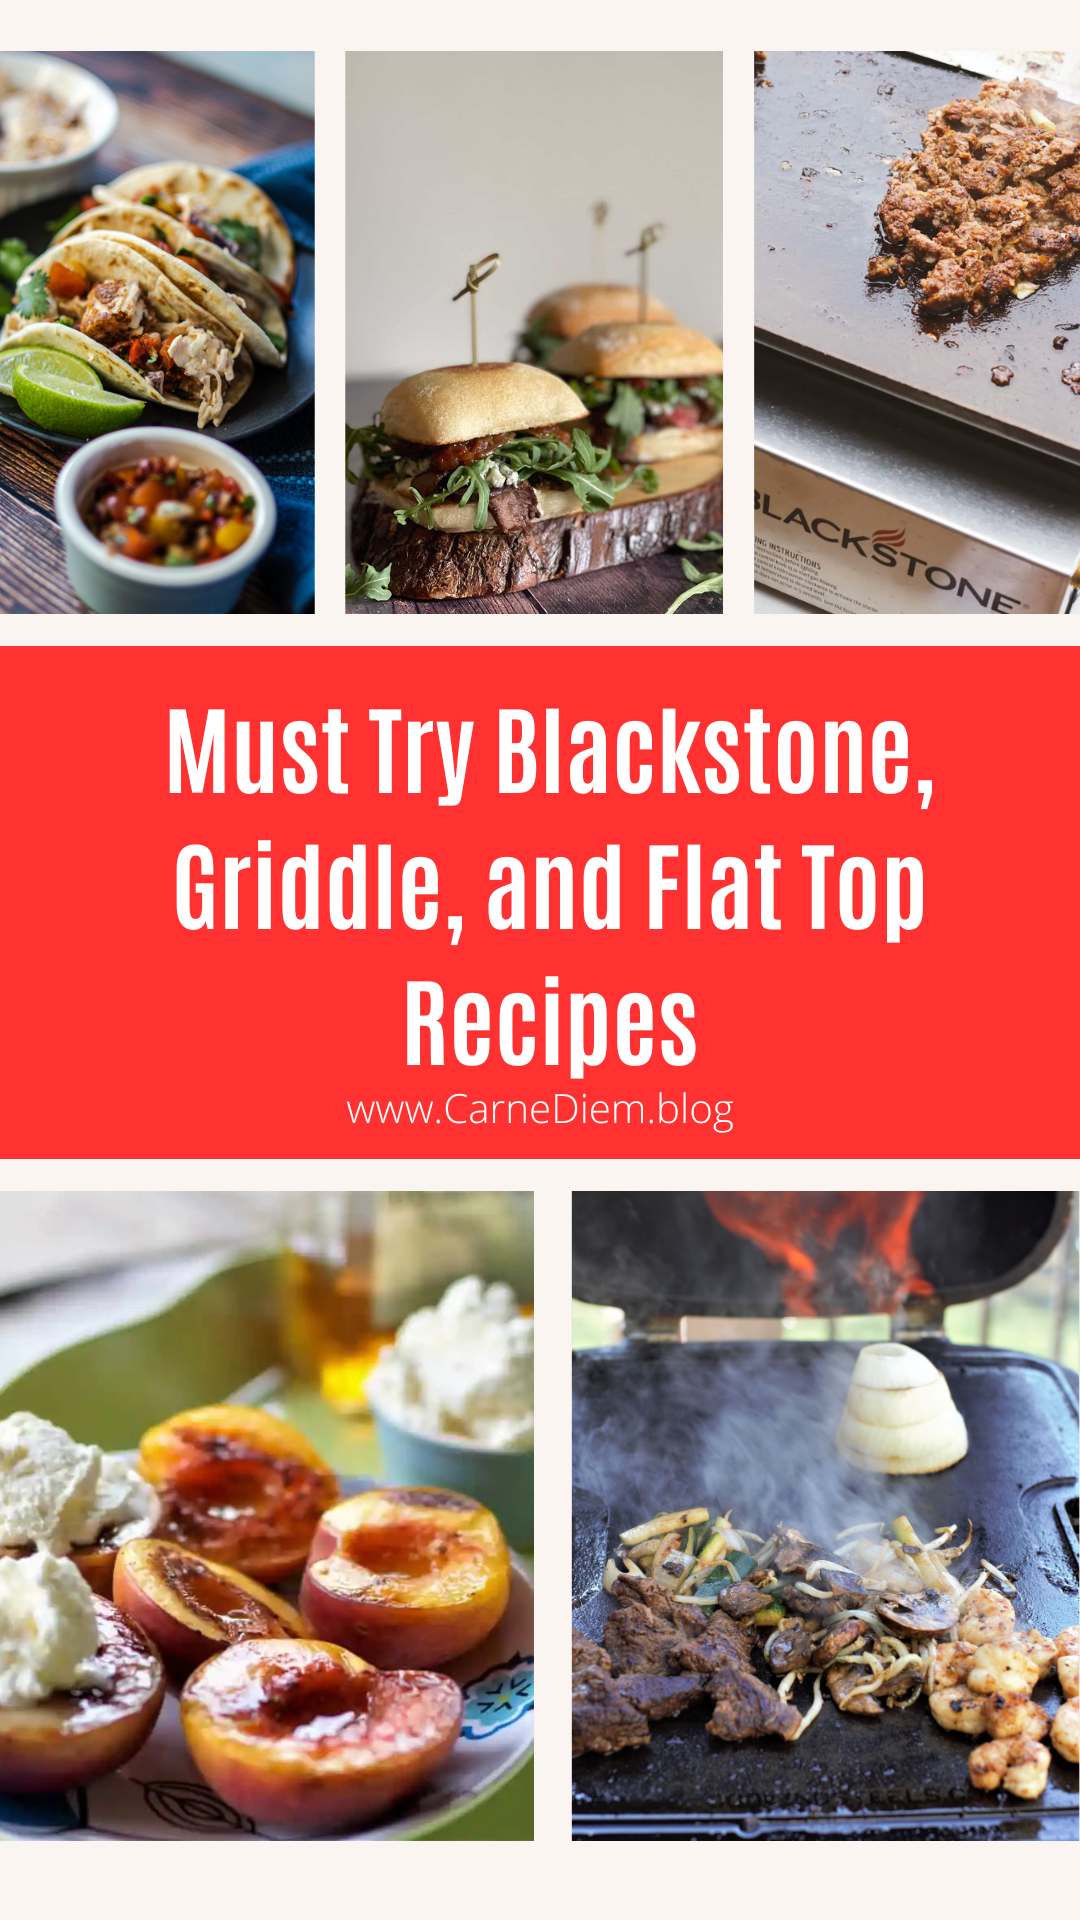 Best Blackstone recipes round up